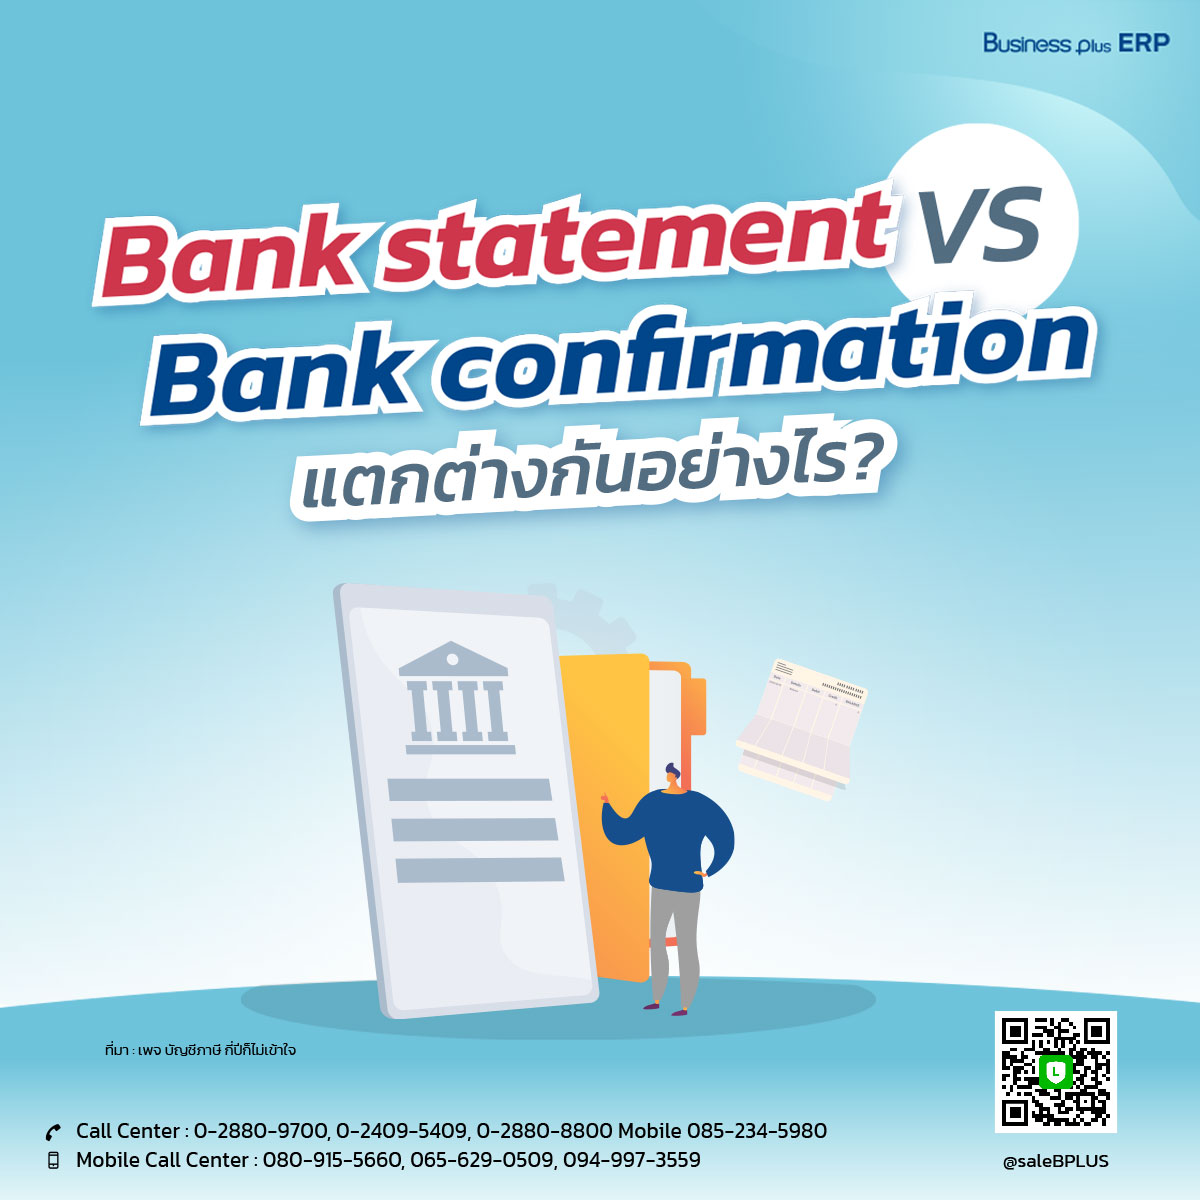 Bank statement VS Bank confirmation แตกต่างกันอย่างไร?